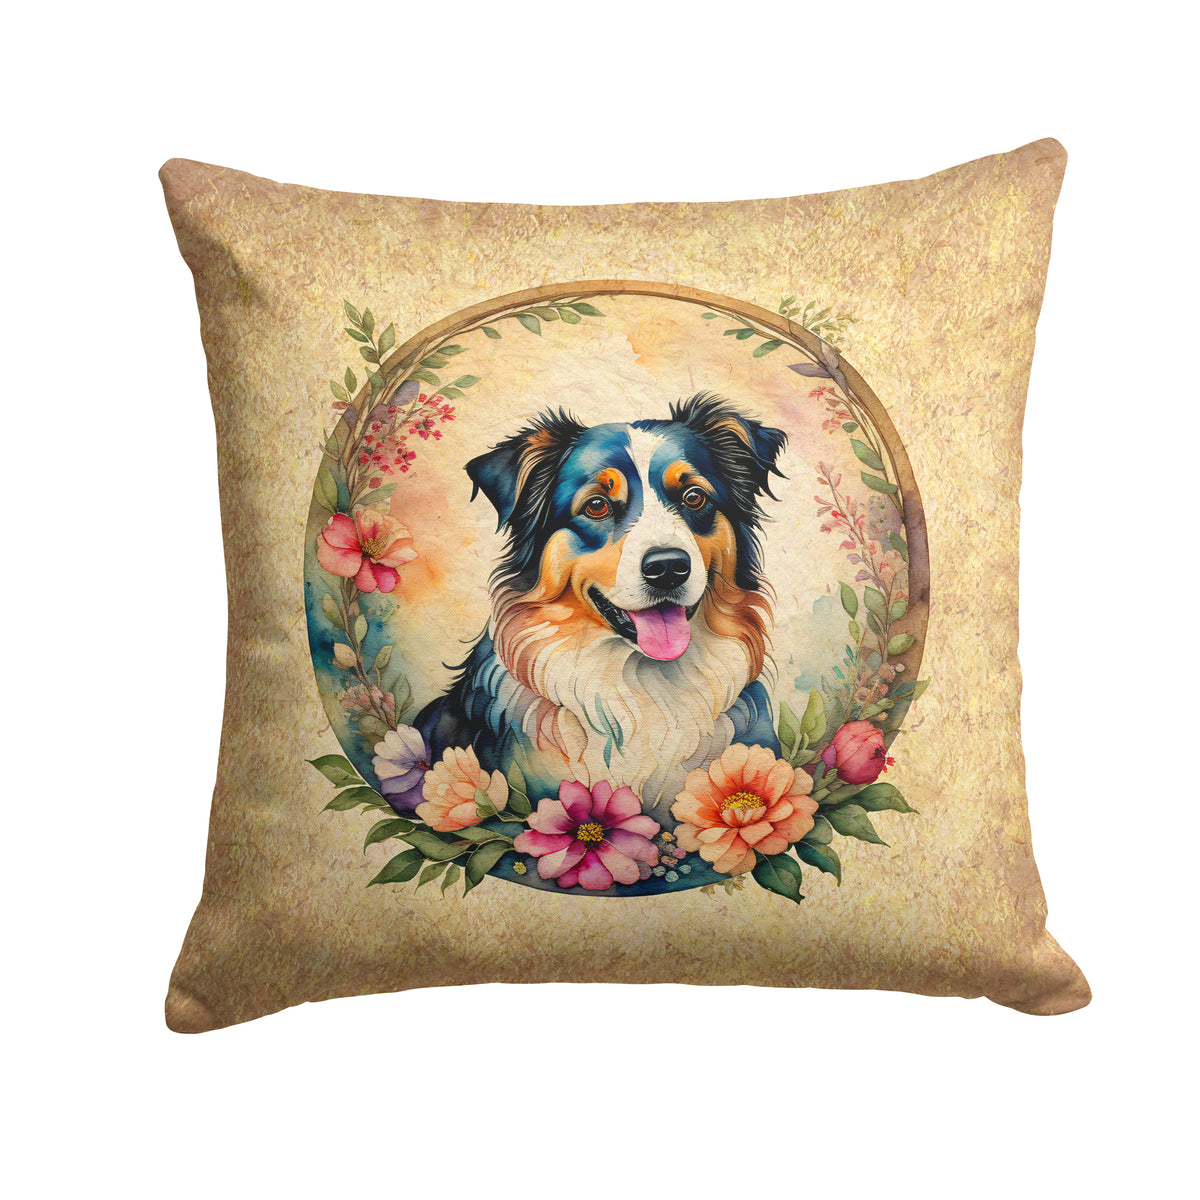 Buy this Australian Shepherd and Flowers Fabric Decorative Pillow